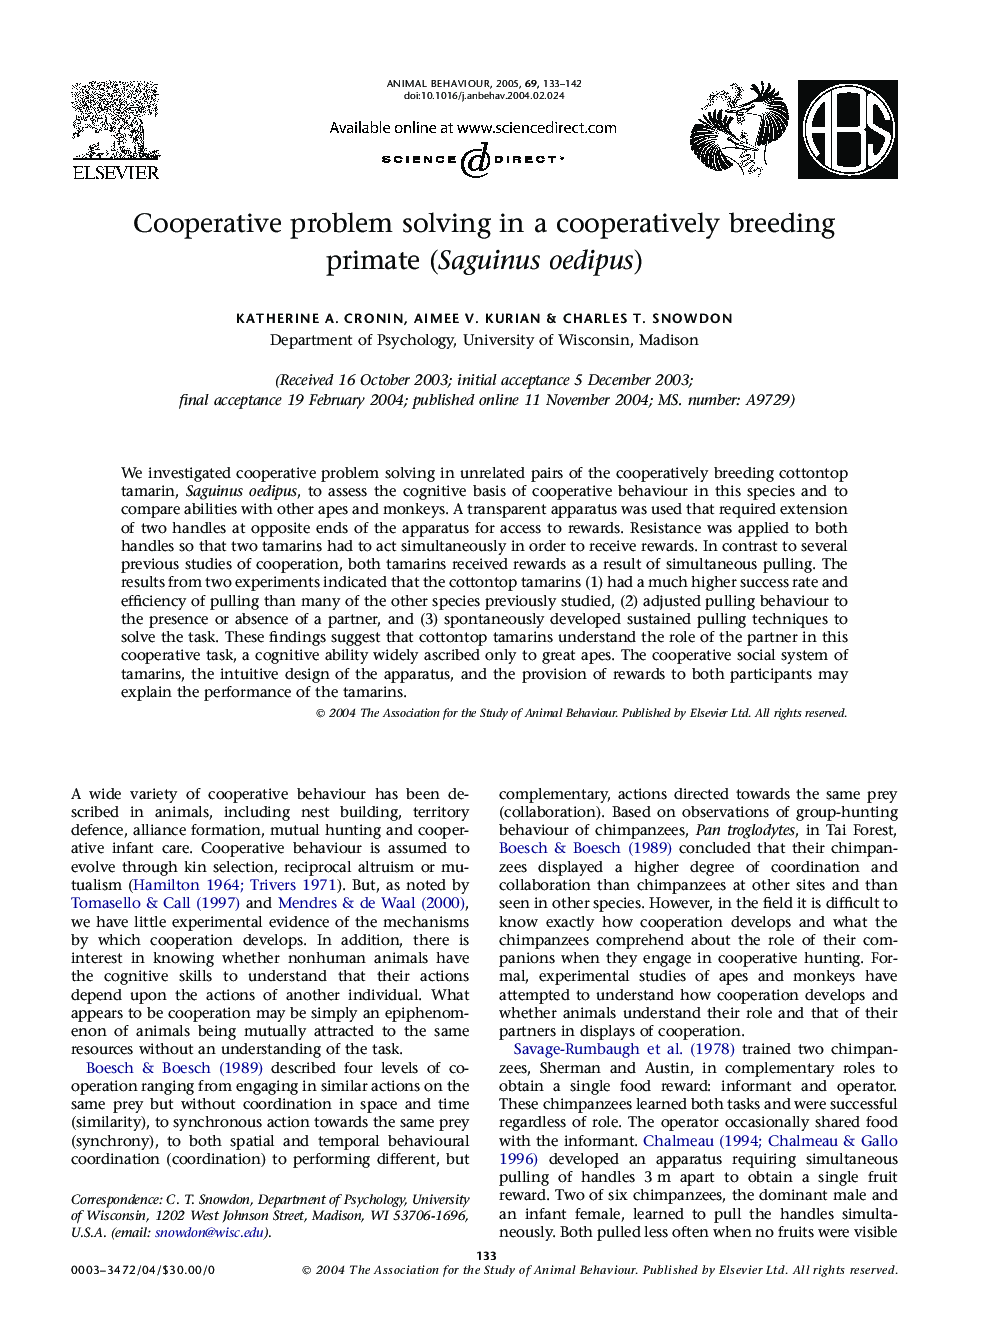 Cooperative problem solving in a cooperatively breeding primate (Saguinus oedipus)